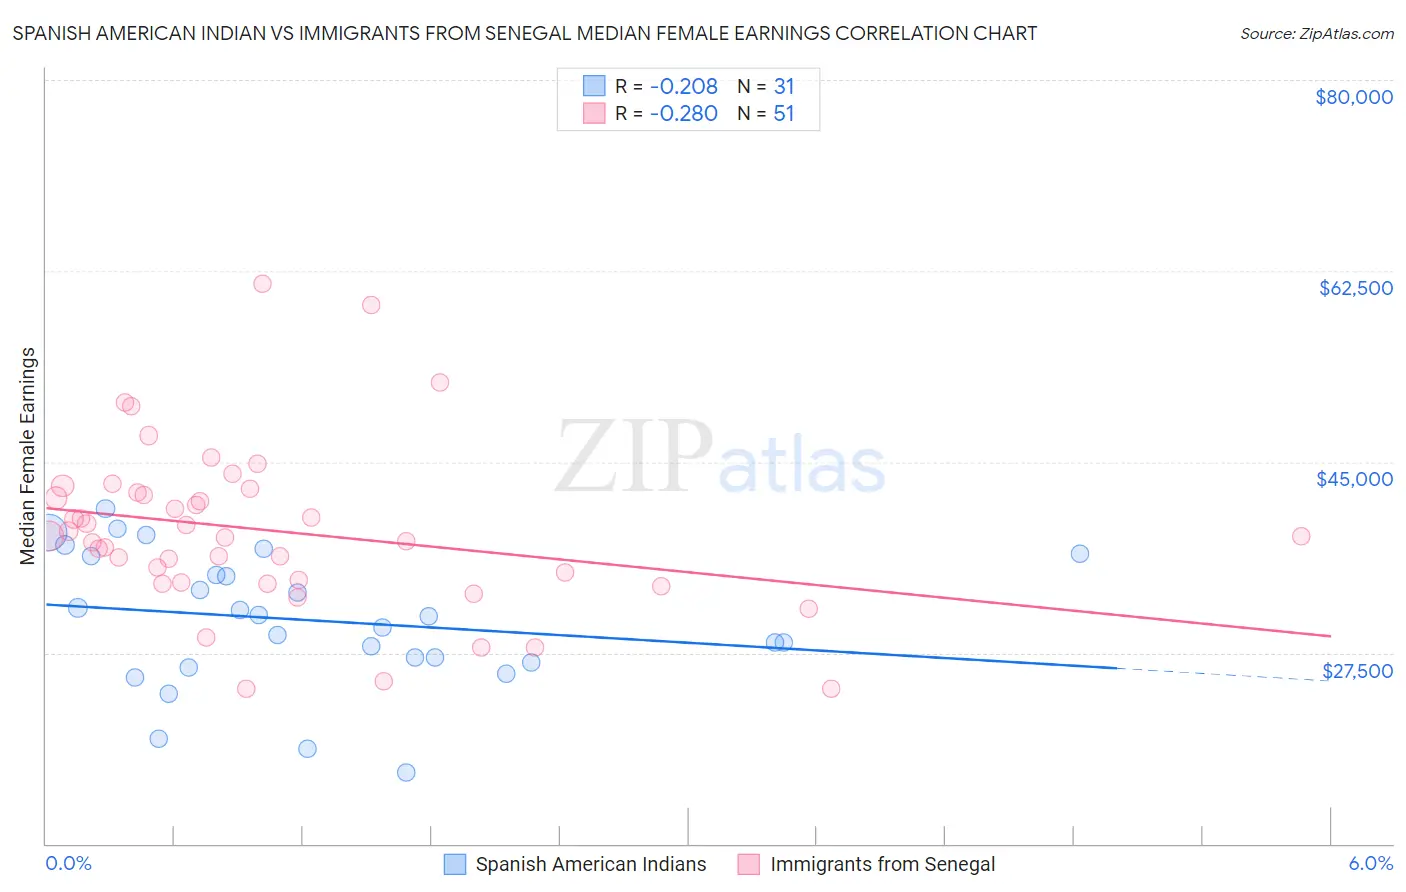 Spanish American Indian vs Immigrants from Senegal Median Female Earnings